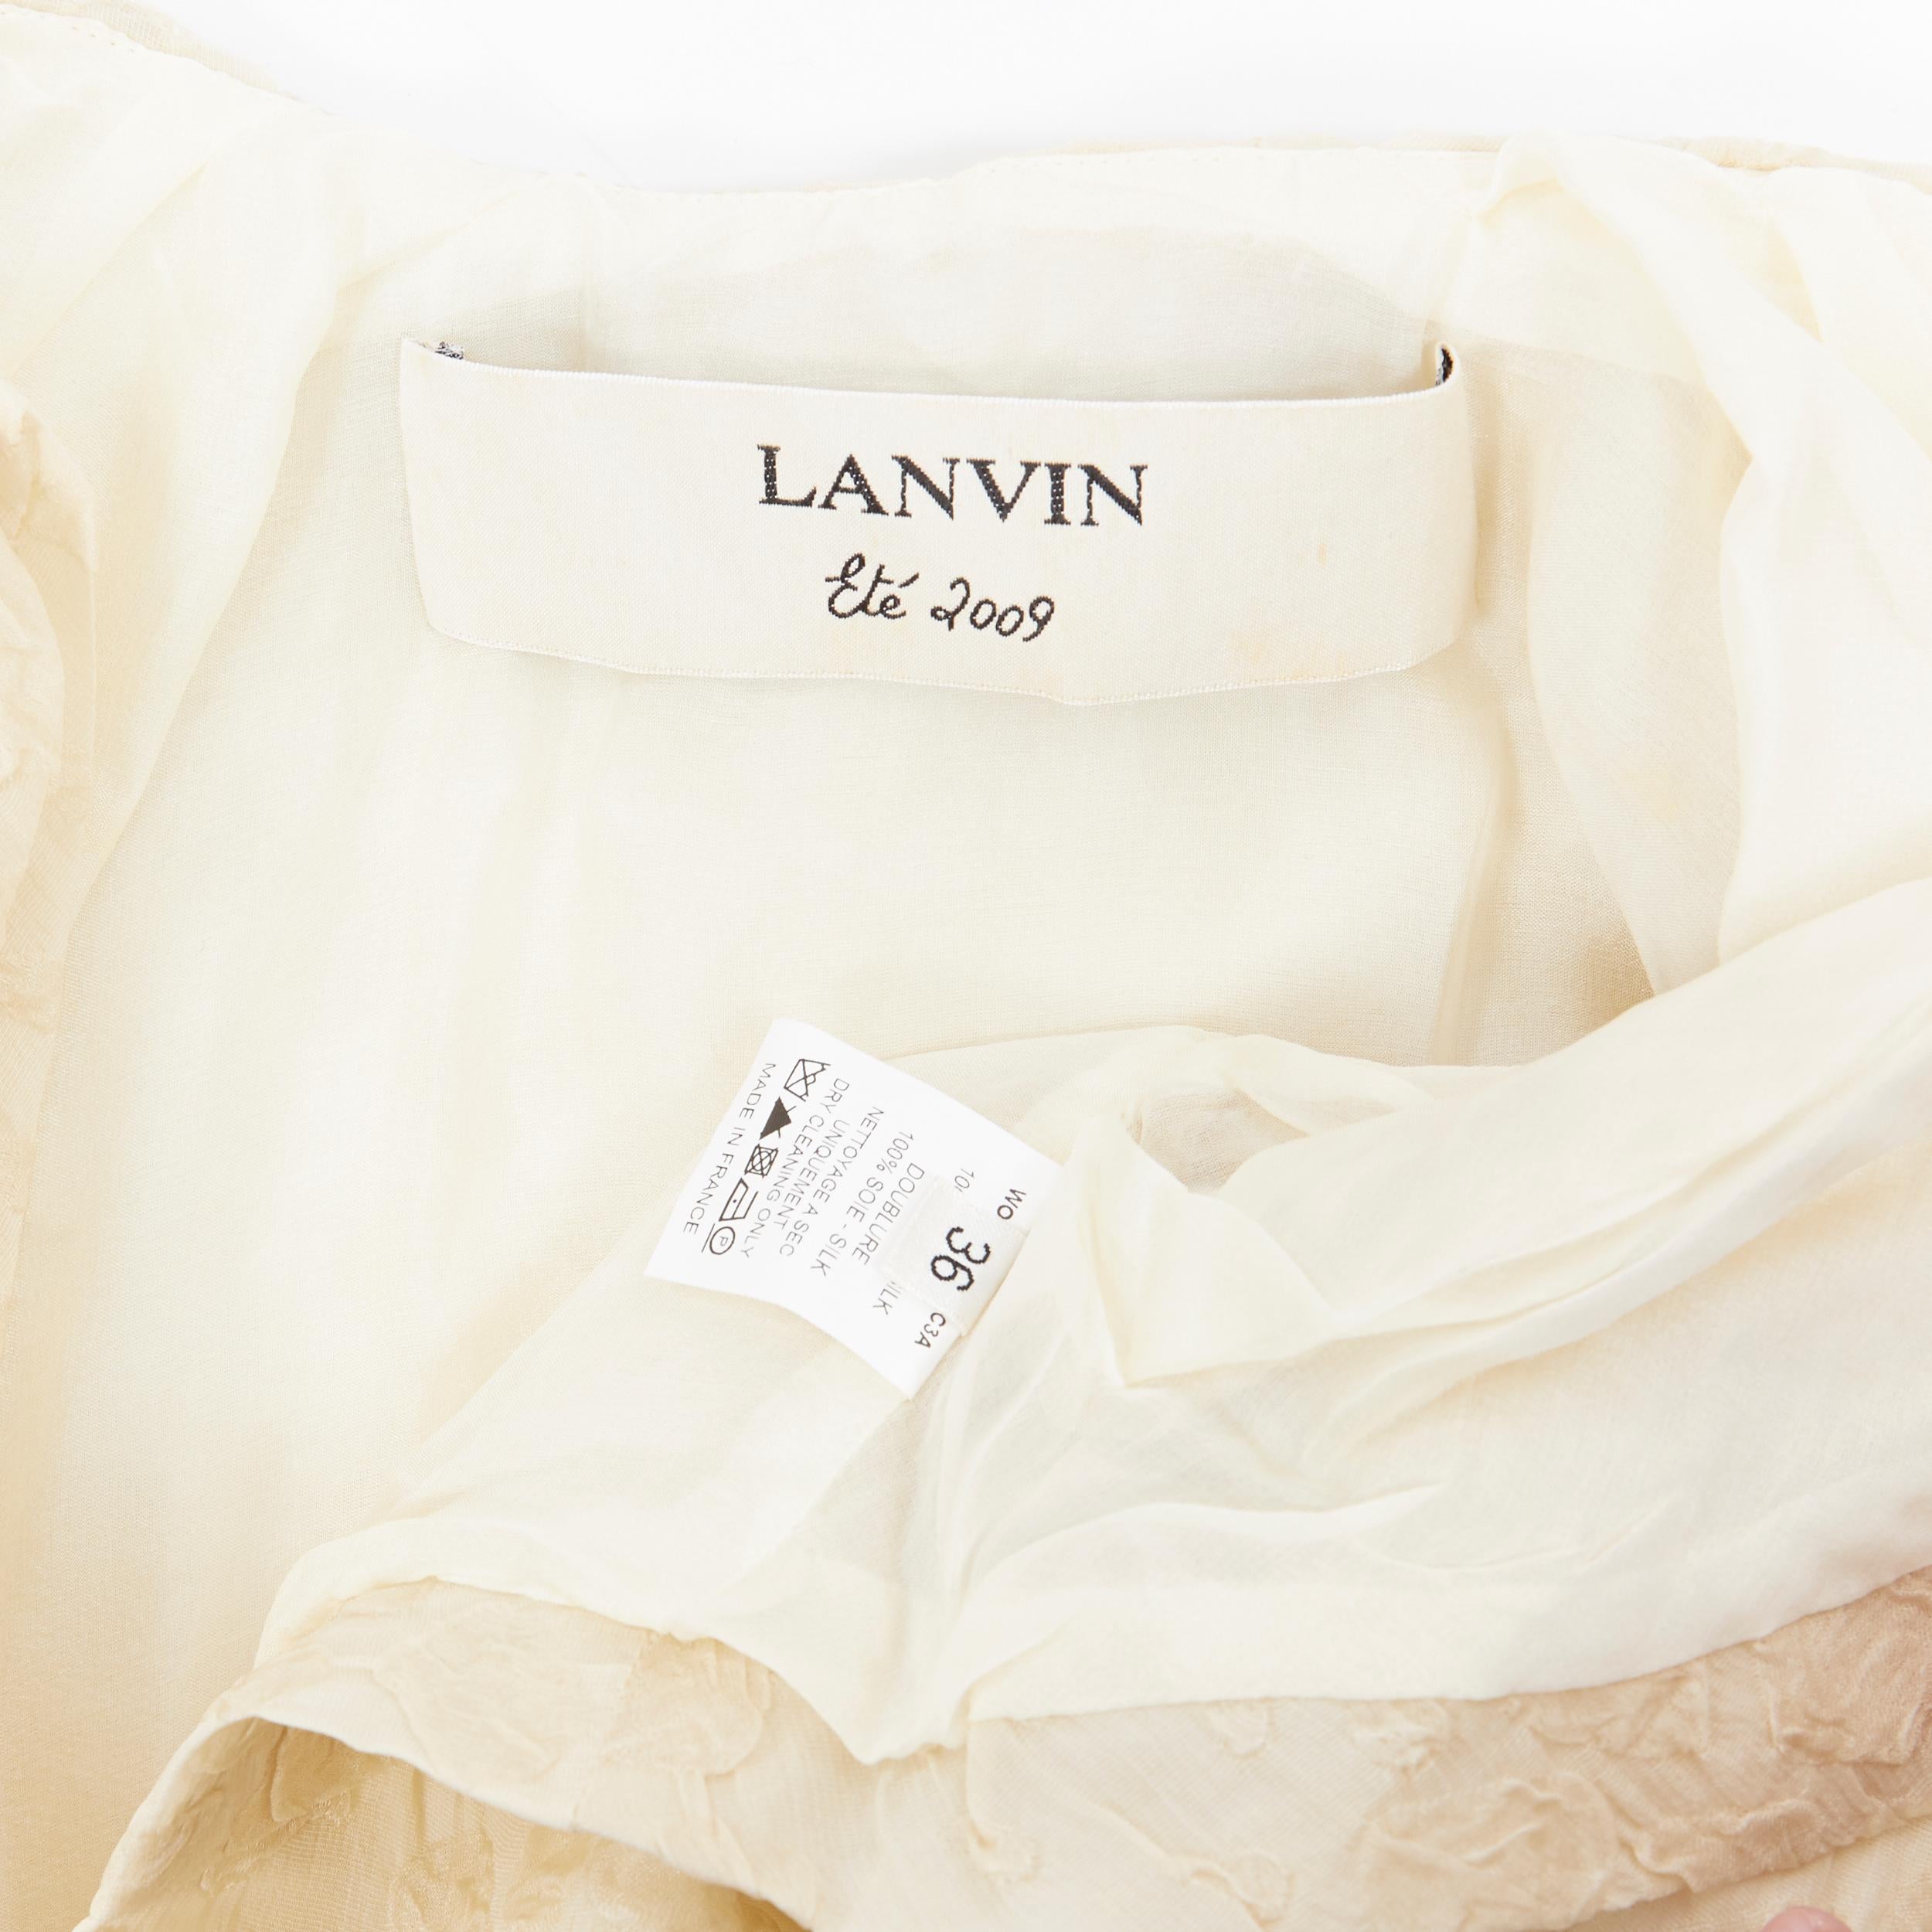 LANVIN Elbaz 2009 beige floral cloque silk cropped shrug jacket FR36 XS 4